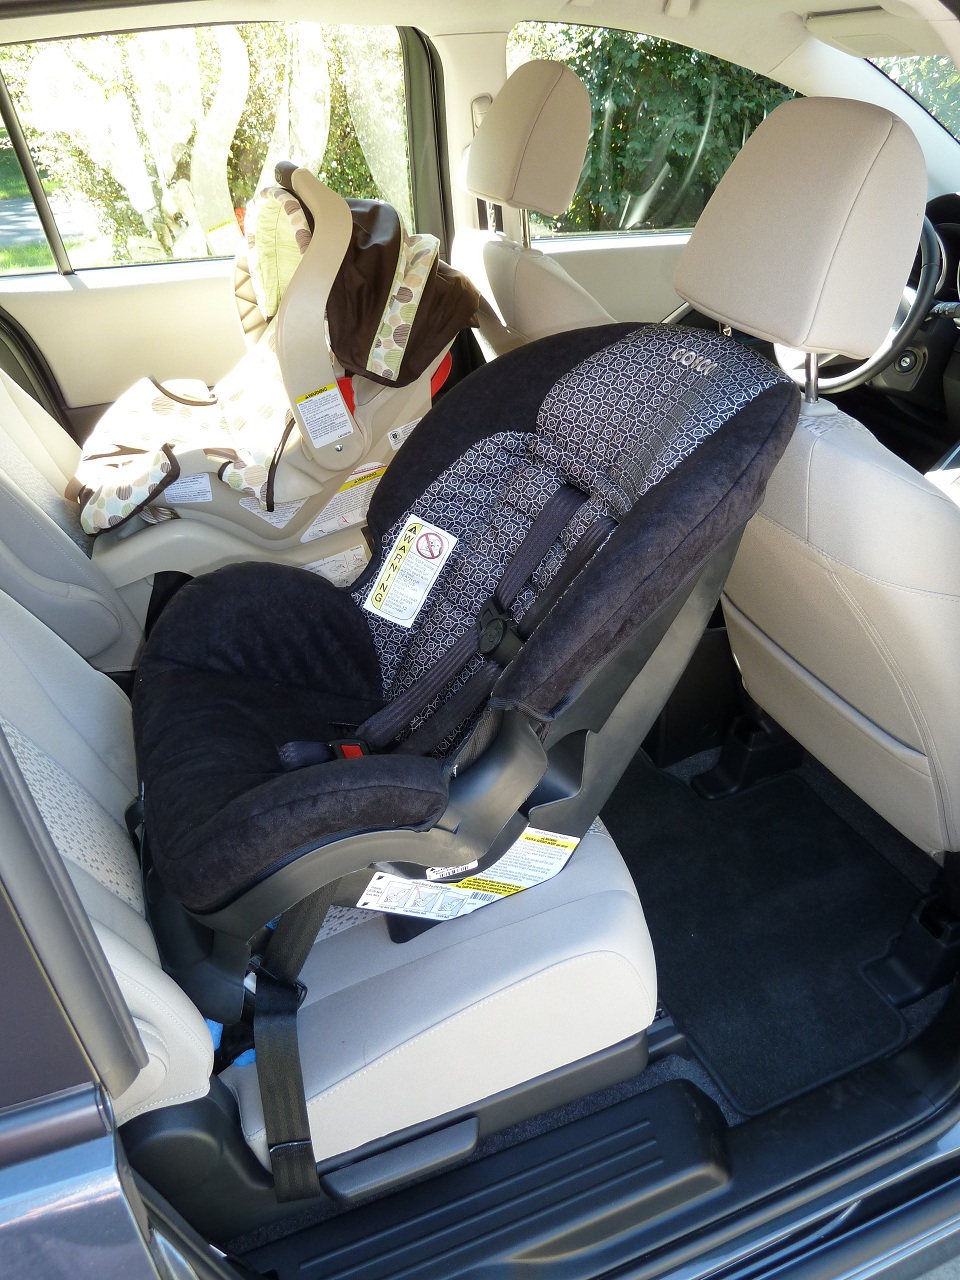 mazda 3 rear facing car seat